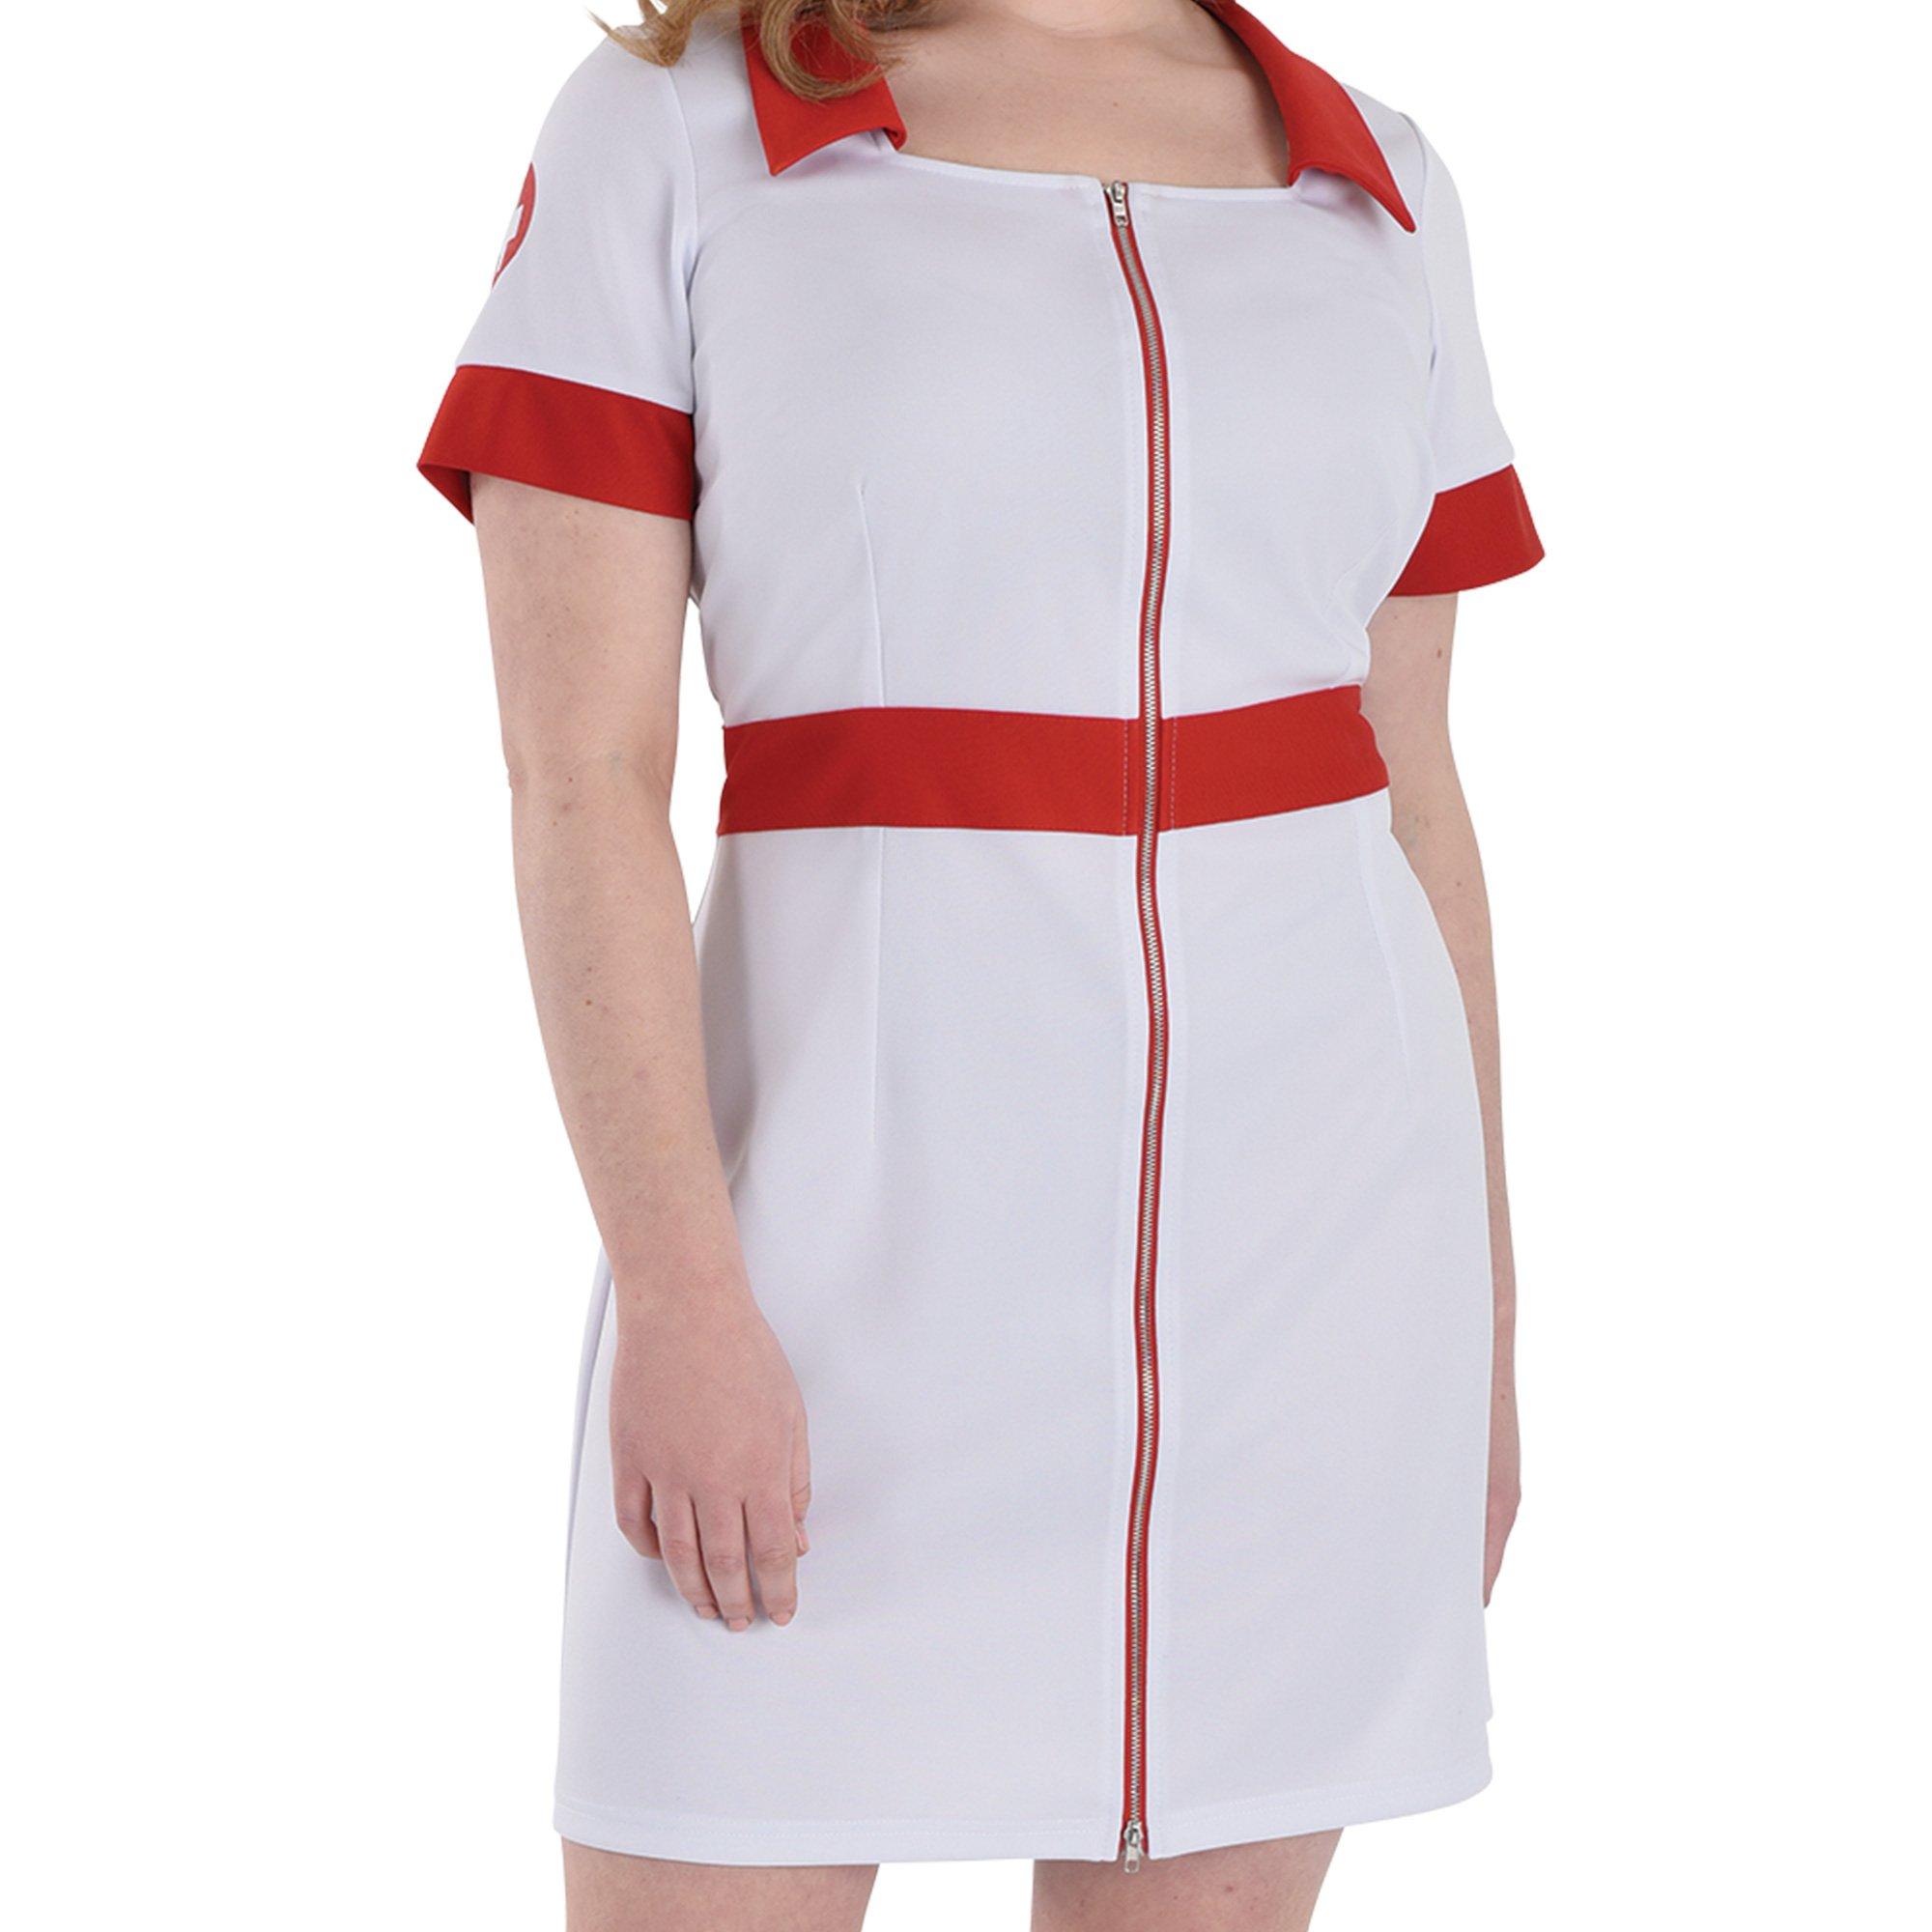 white nurse dress